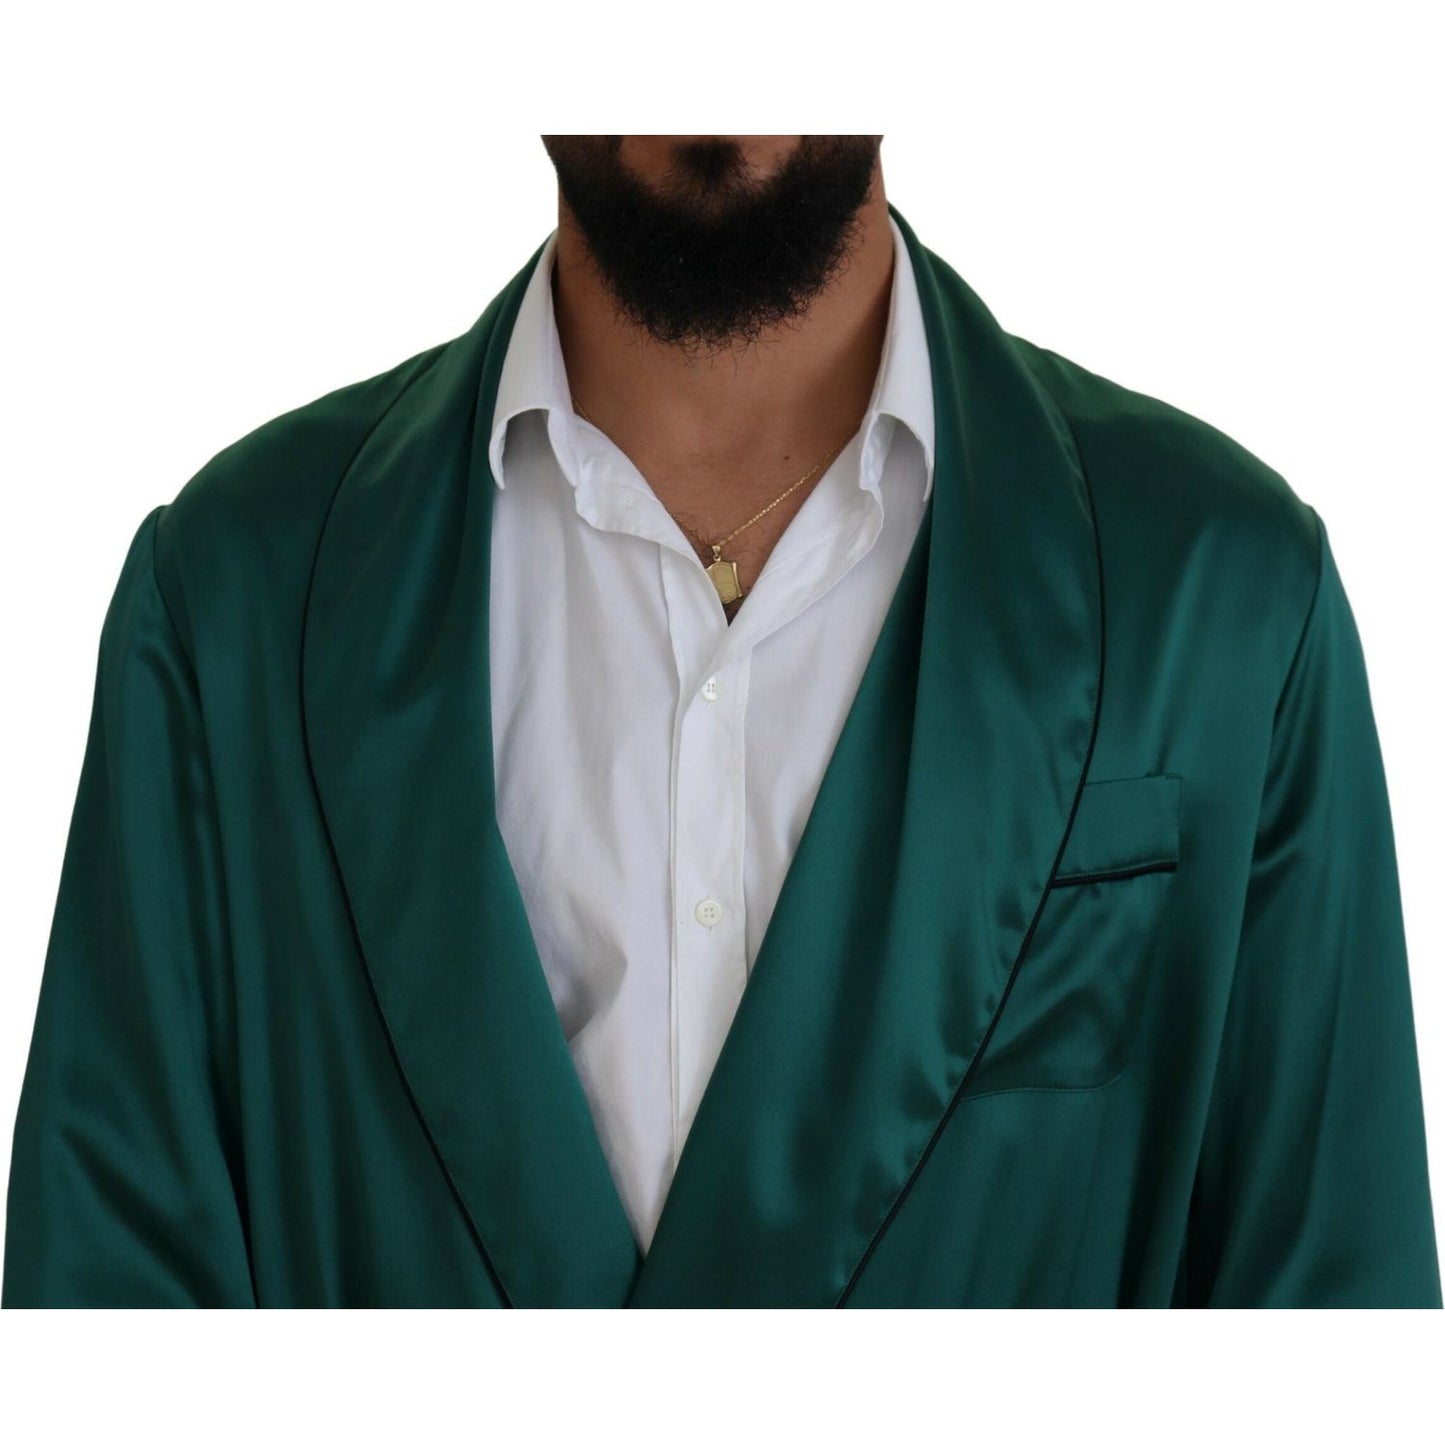 Dolce & Gabbana Elegant Silk Robe in Lush Green green-silk-waist-belt-robe-sleepwear IMG_4010-scaled-d9de78c0-3f3.jpg